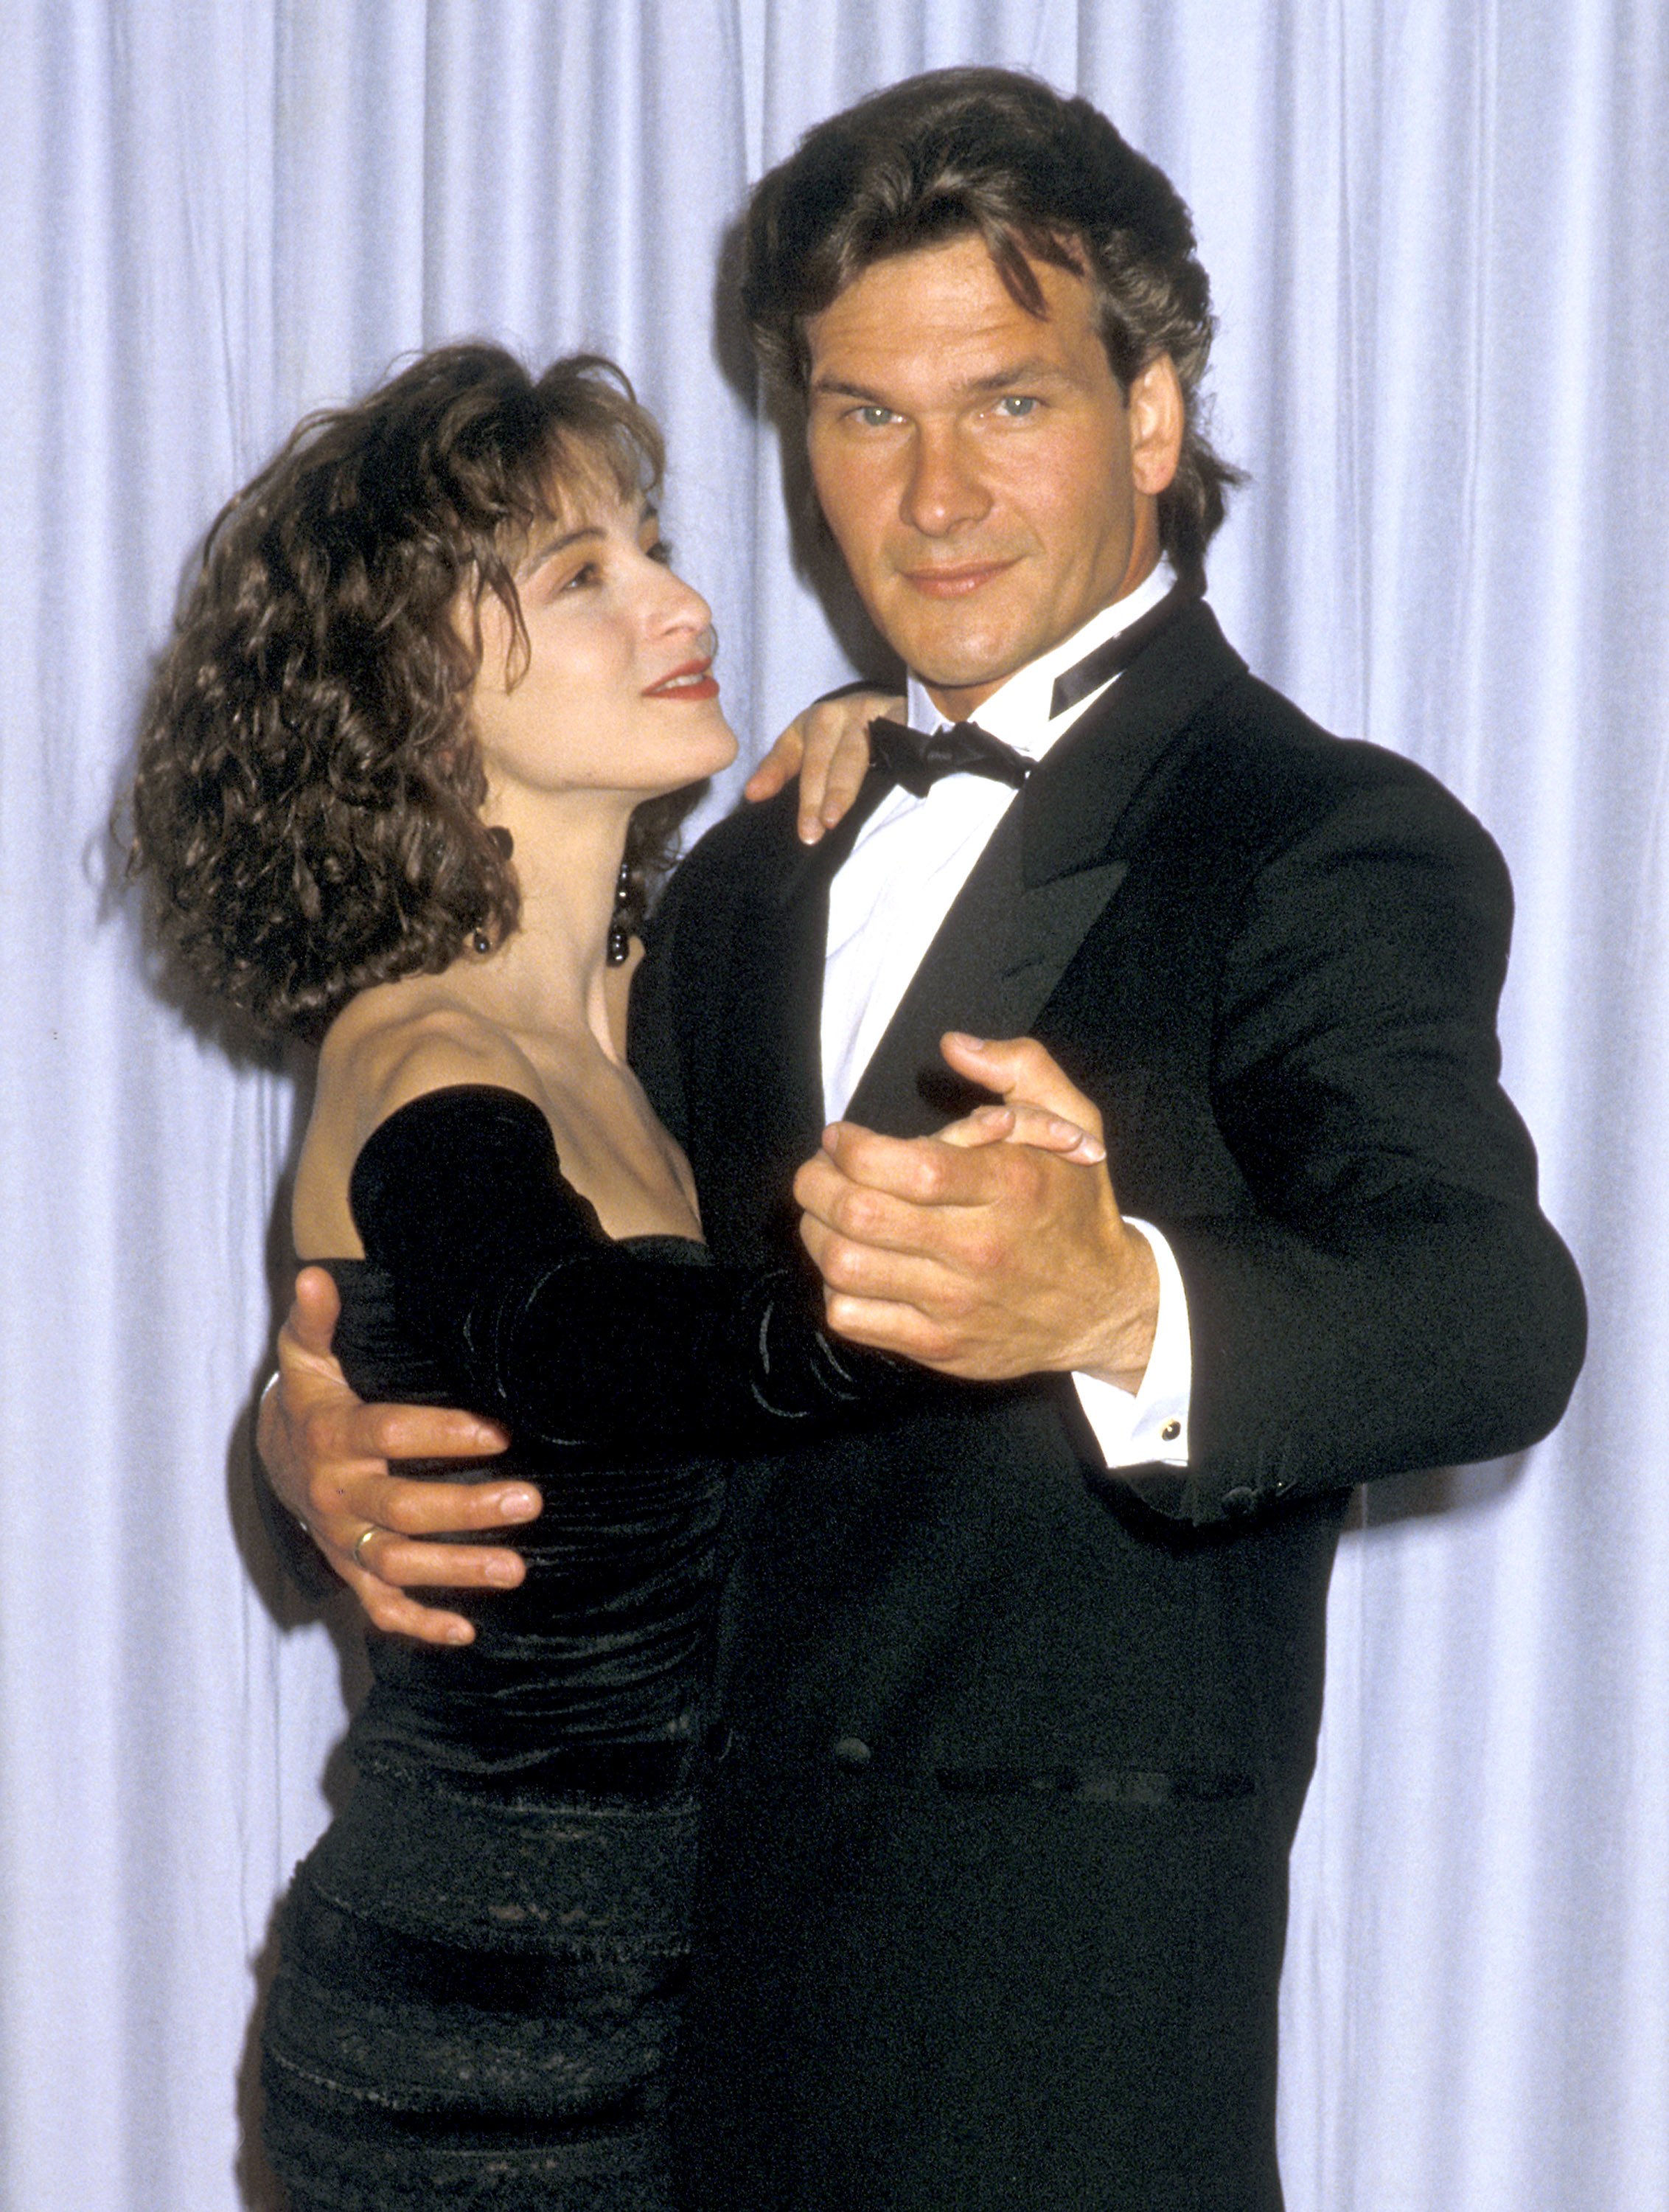 Jennifer Gray und Patrick Swayze am 11. April 1988 in Los Angeles, Kalifornien. | Quelle: Getty Images